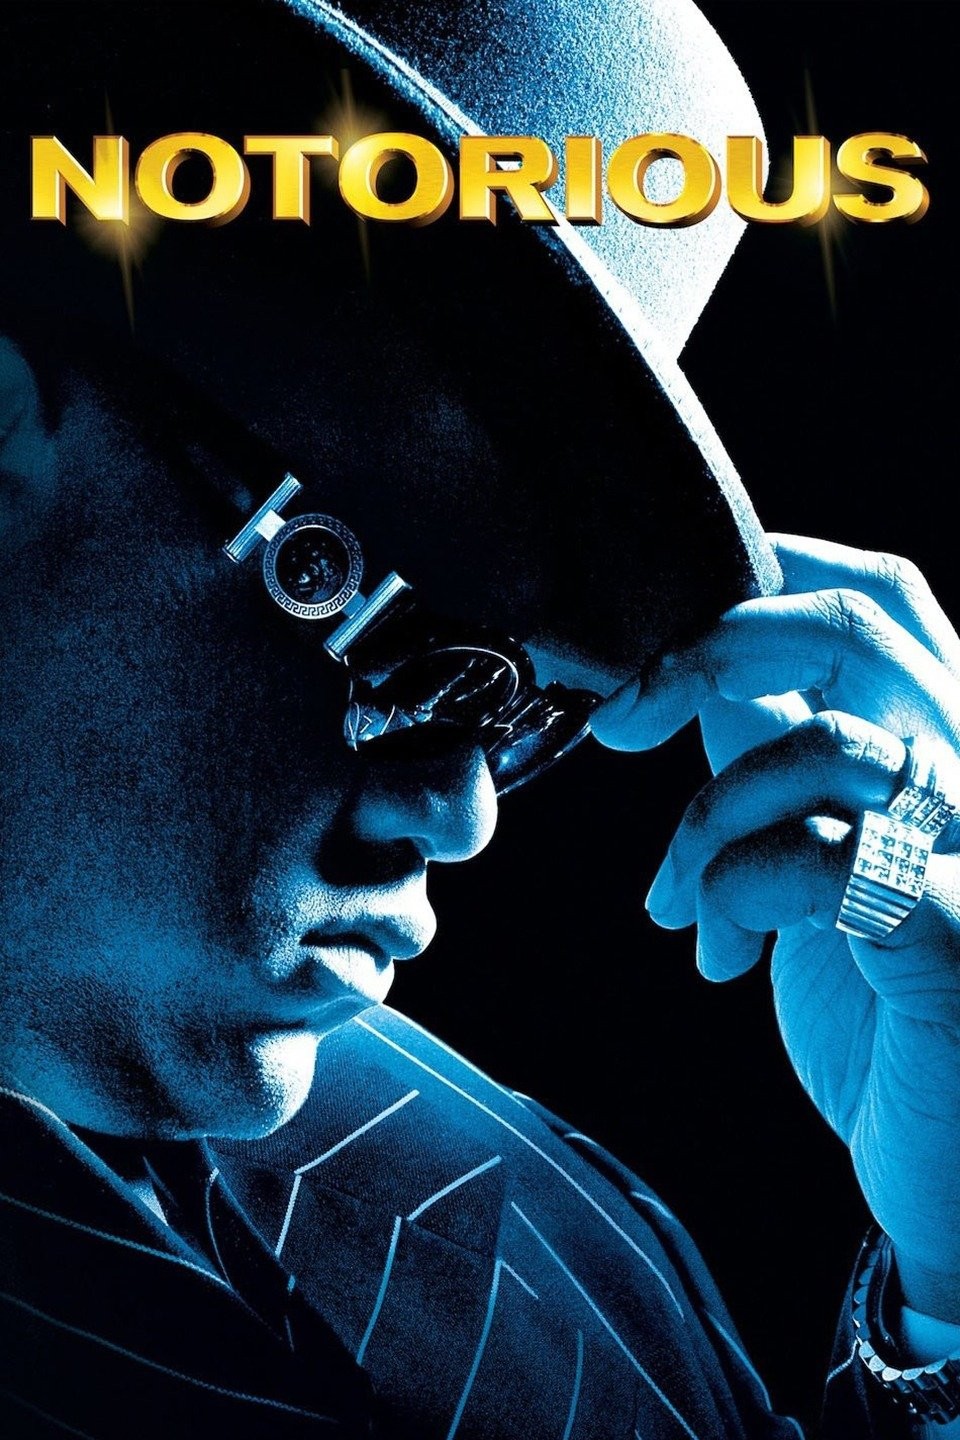 The Notorious B.I.G / Biggie Smalls Lyrics Poster – Fire Press